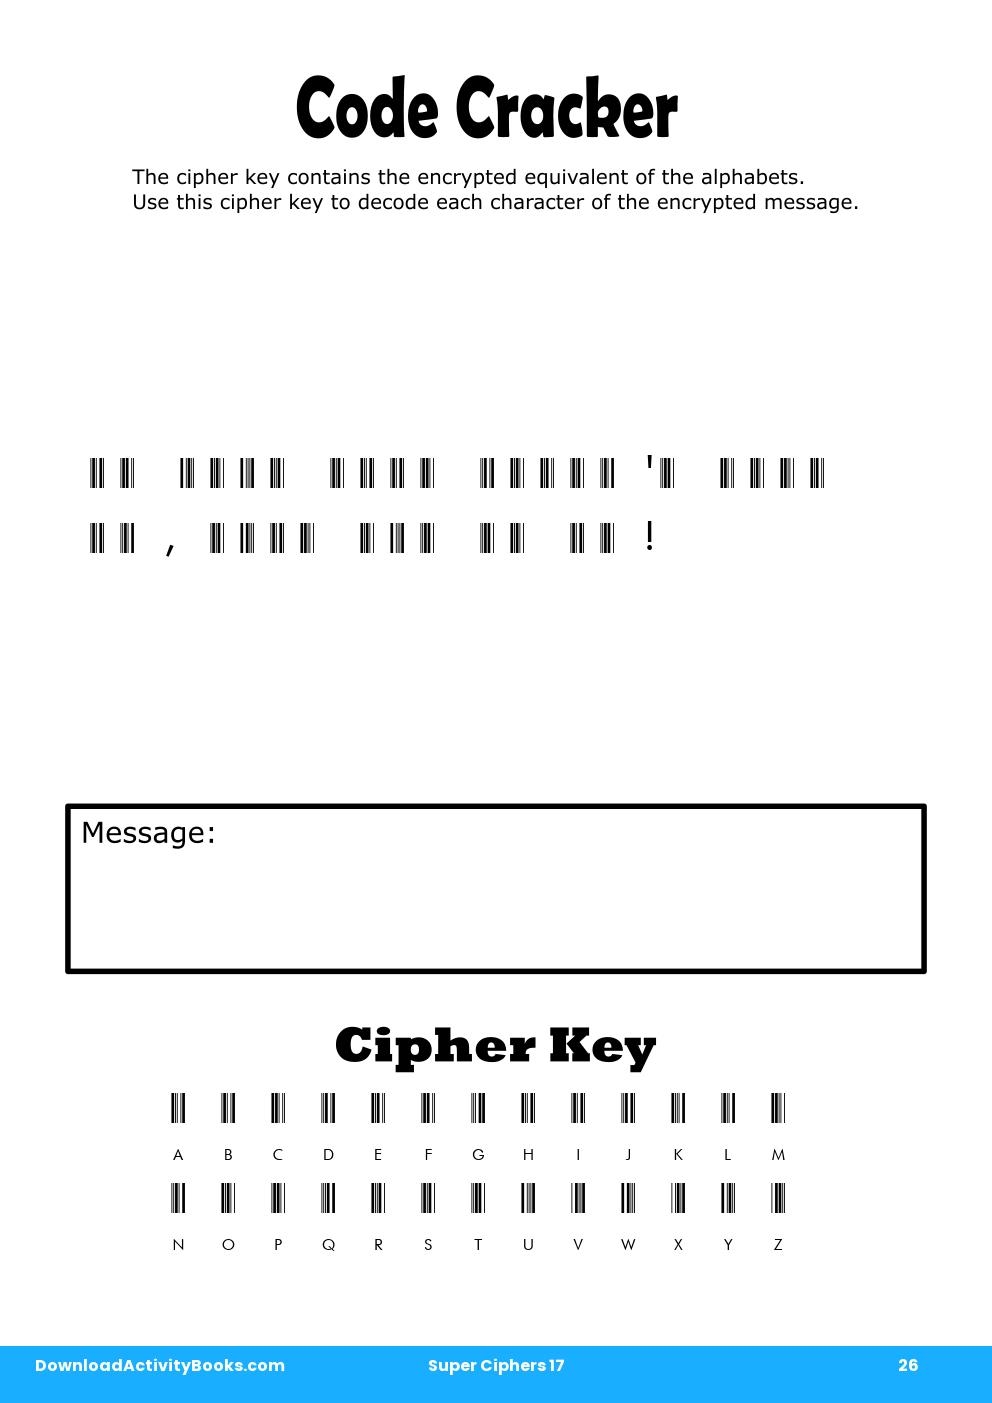 Code Cracker in Super Ciphers 17